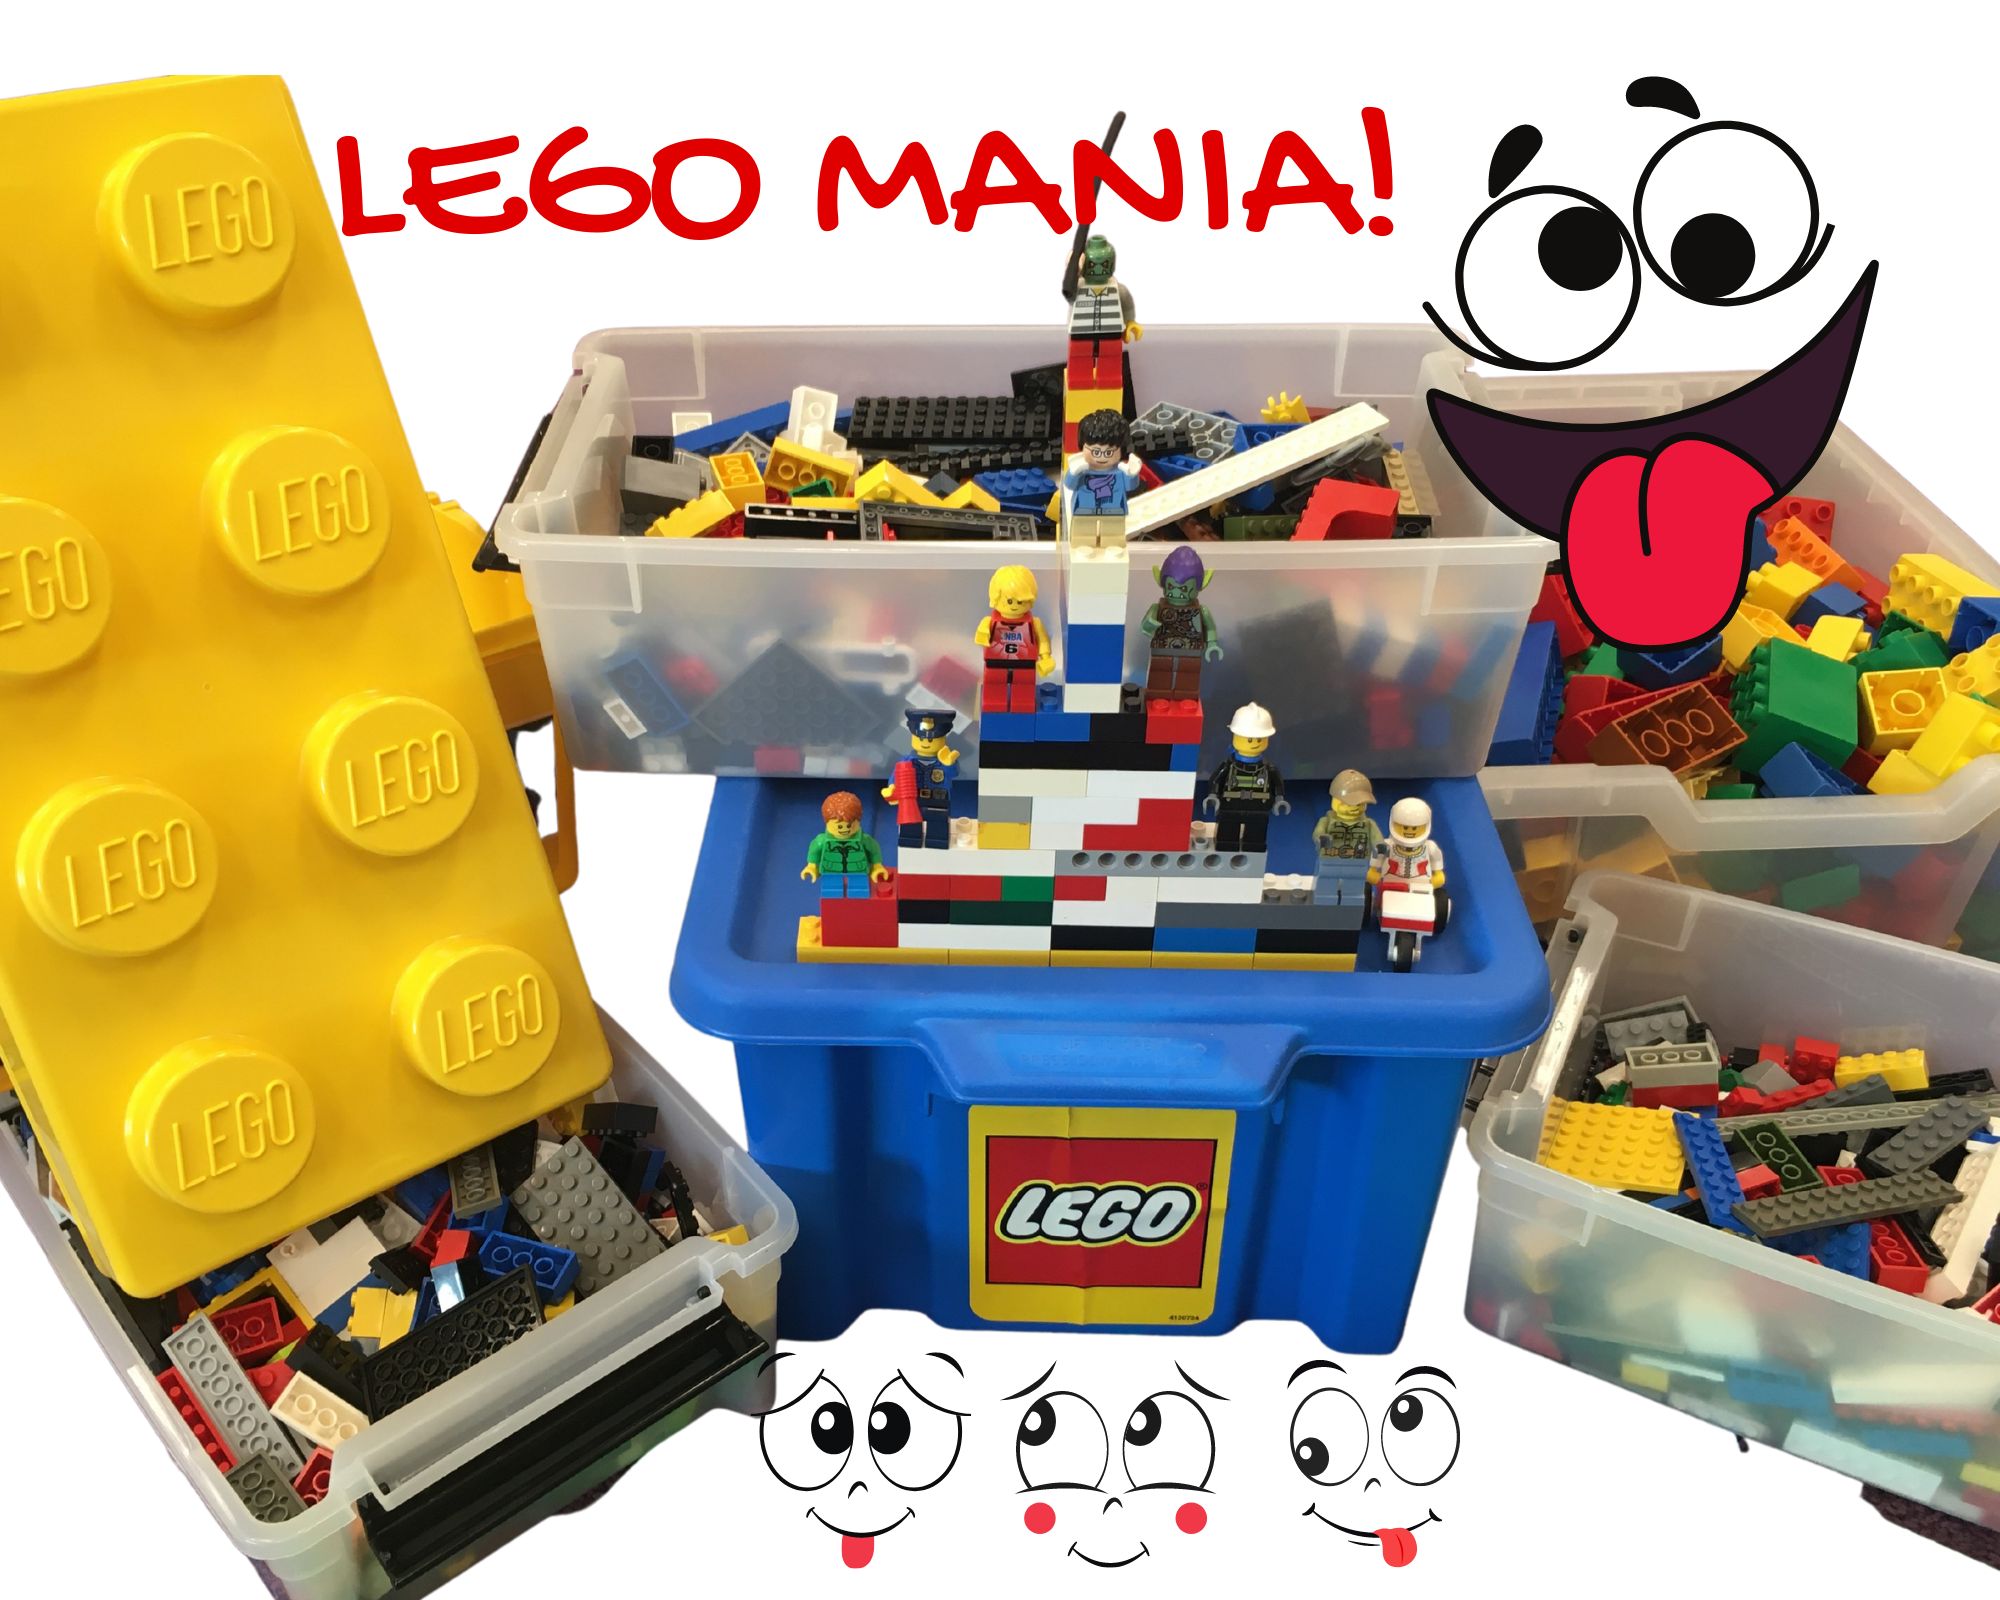 LEGO mania